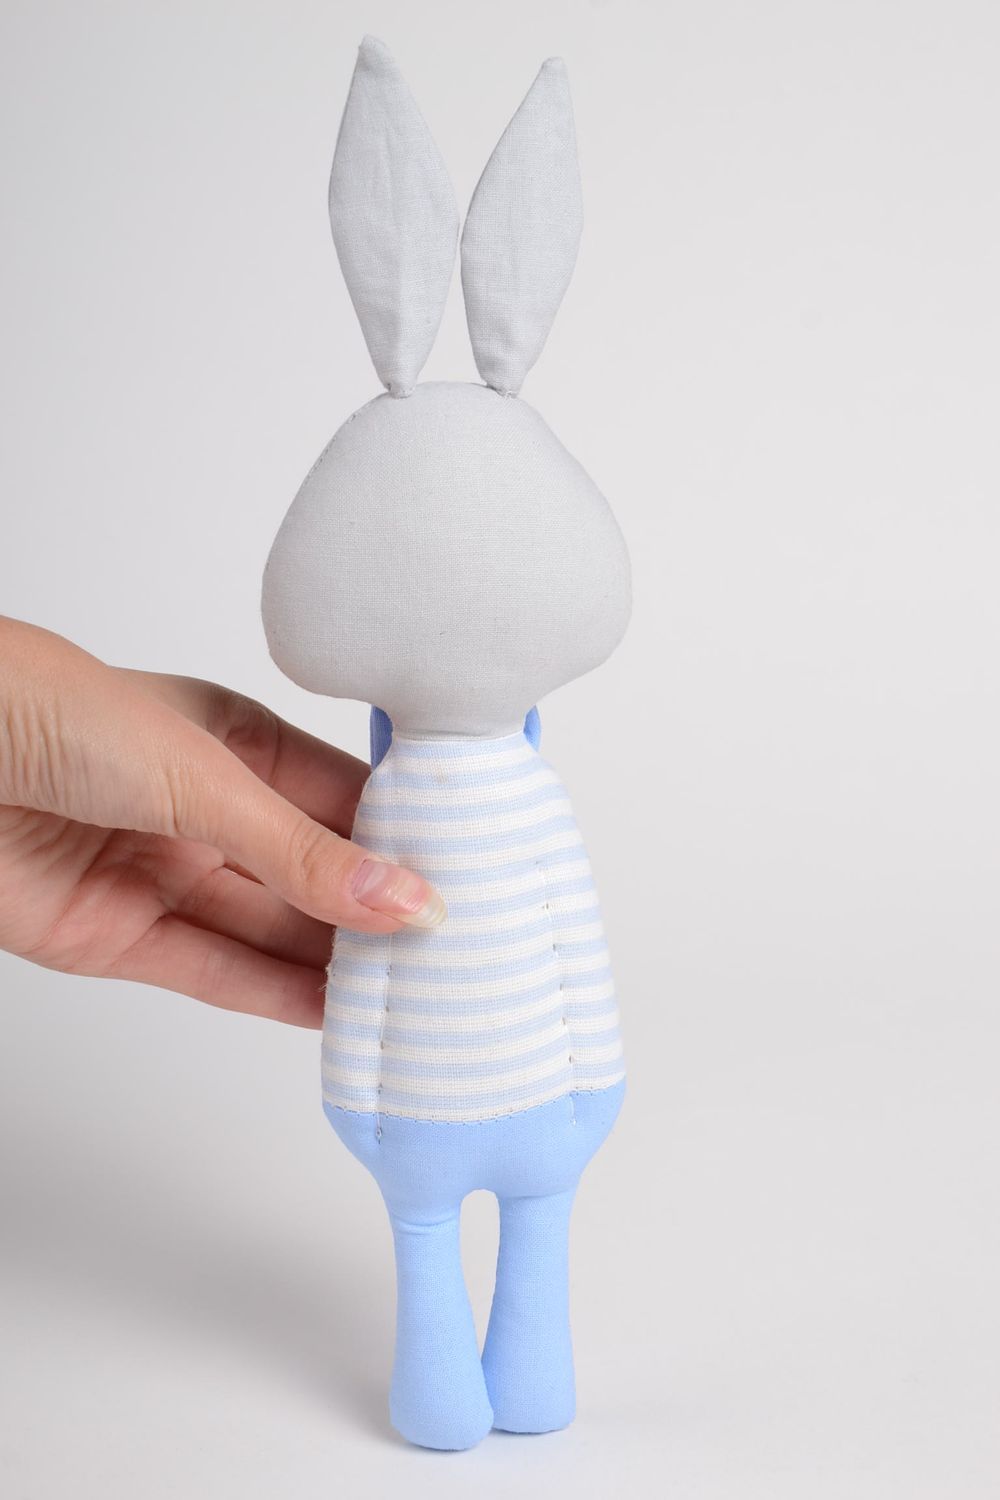 Handmade stylish stuffed toy bunny soft doll for babies interior decor ideas photo 4